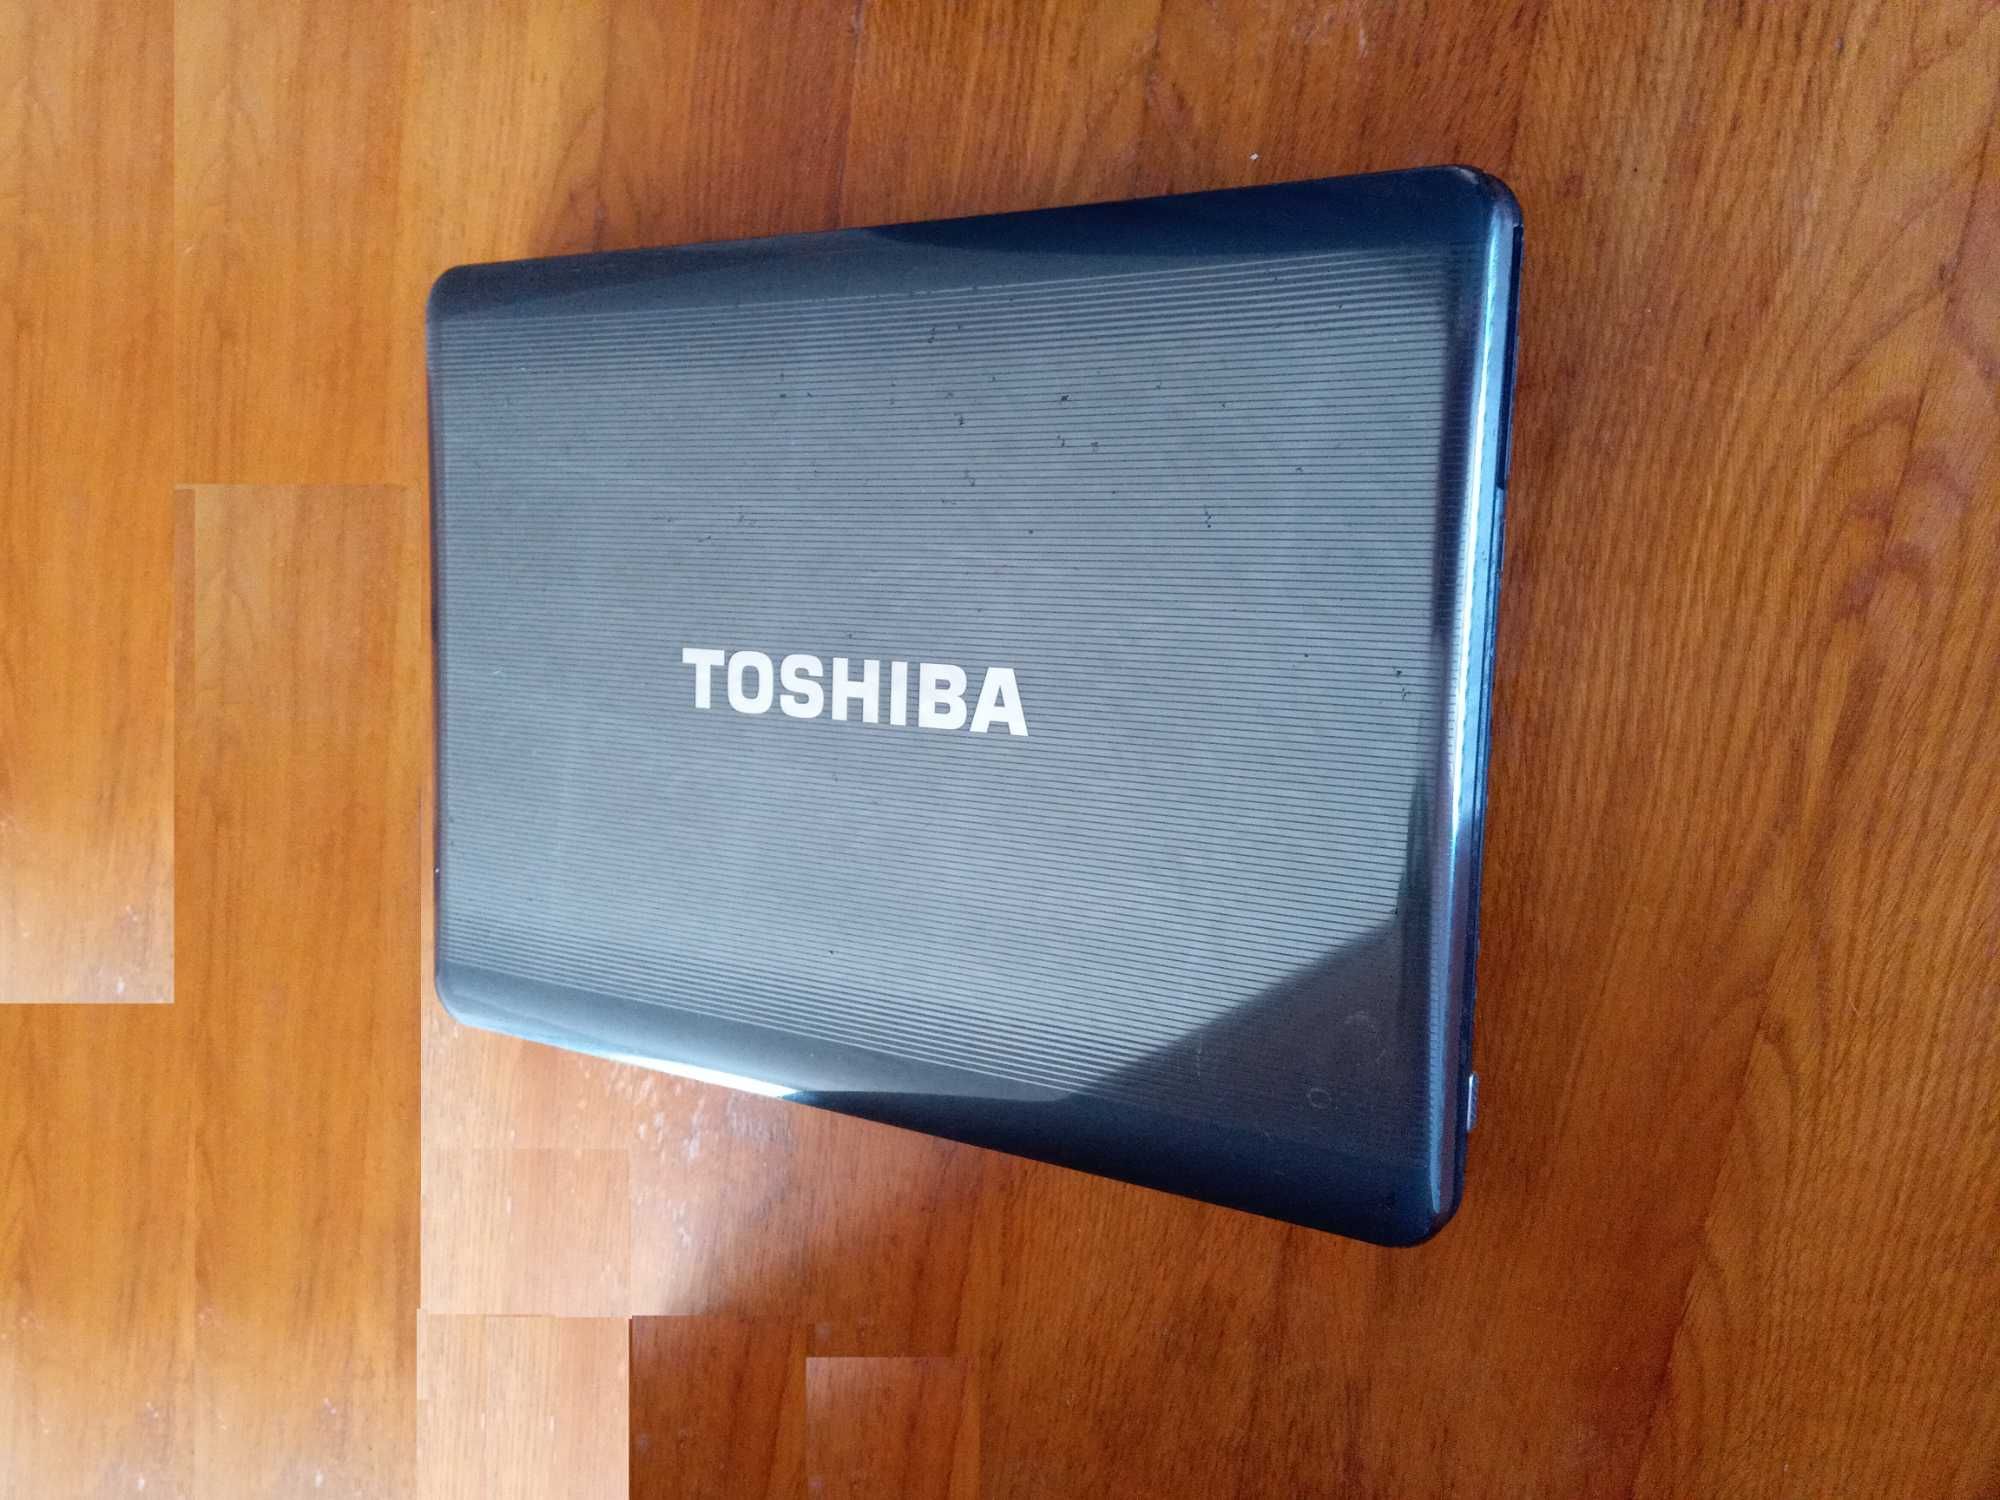 ноутбук Toshiba - прoцeccop Intel Pentium; динамики Harman Kardon®